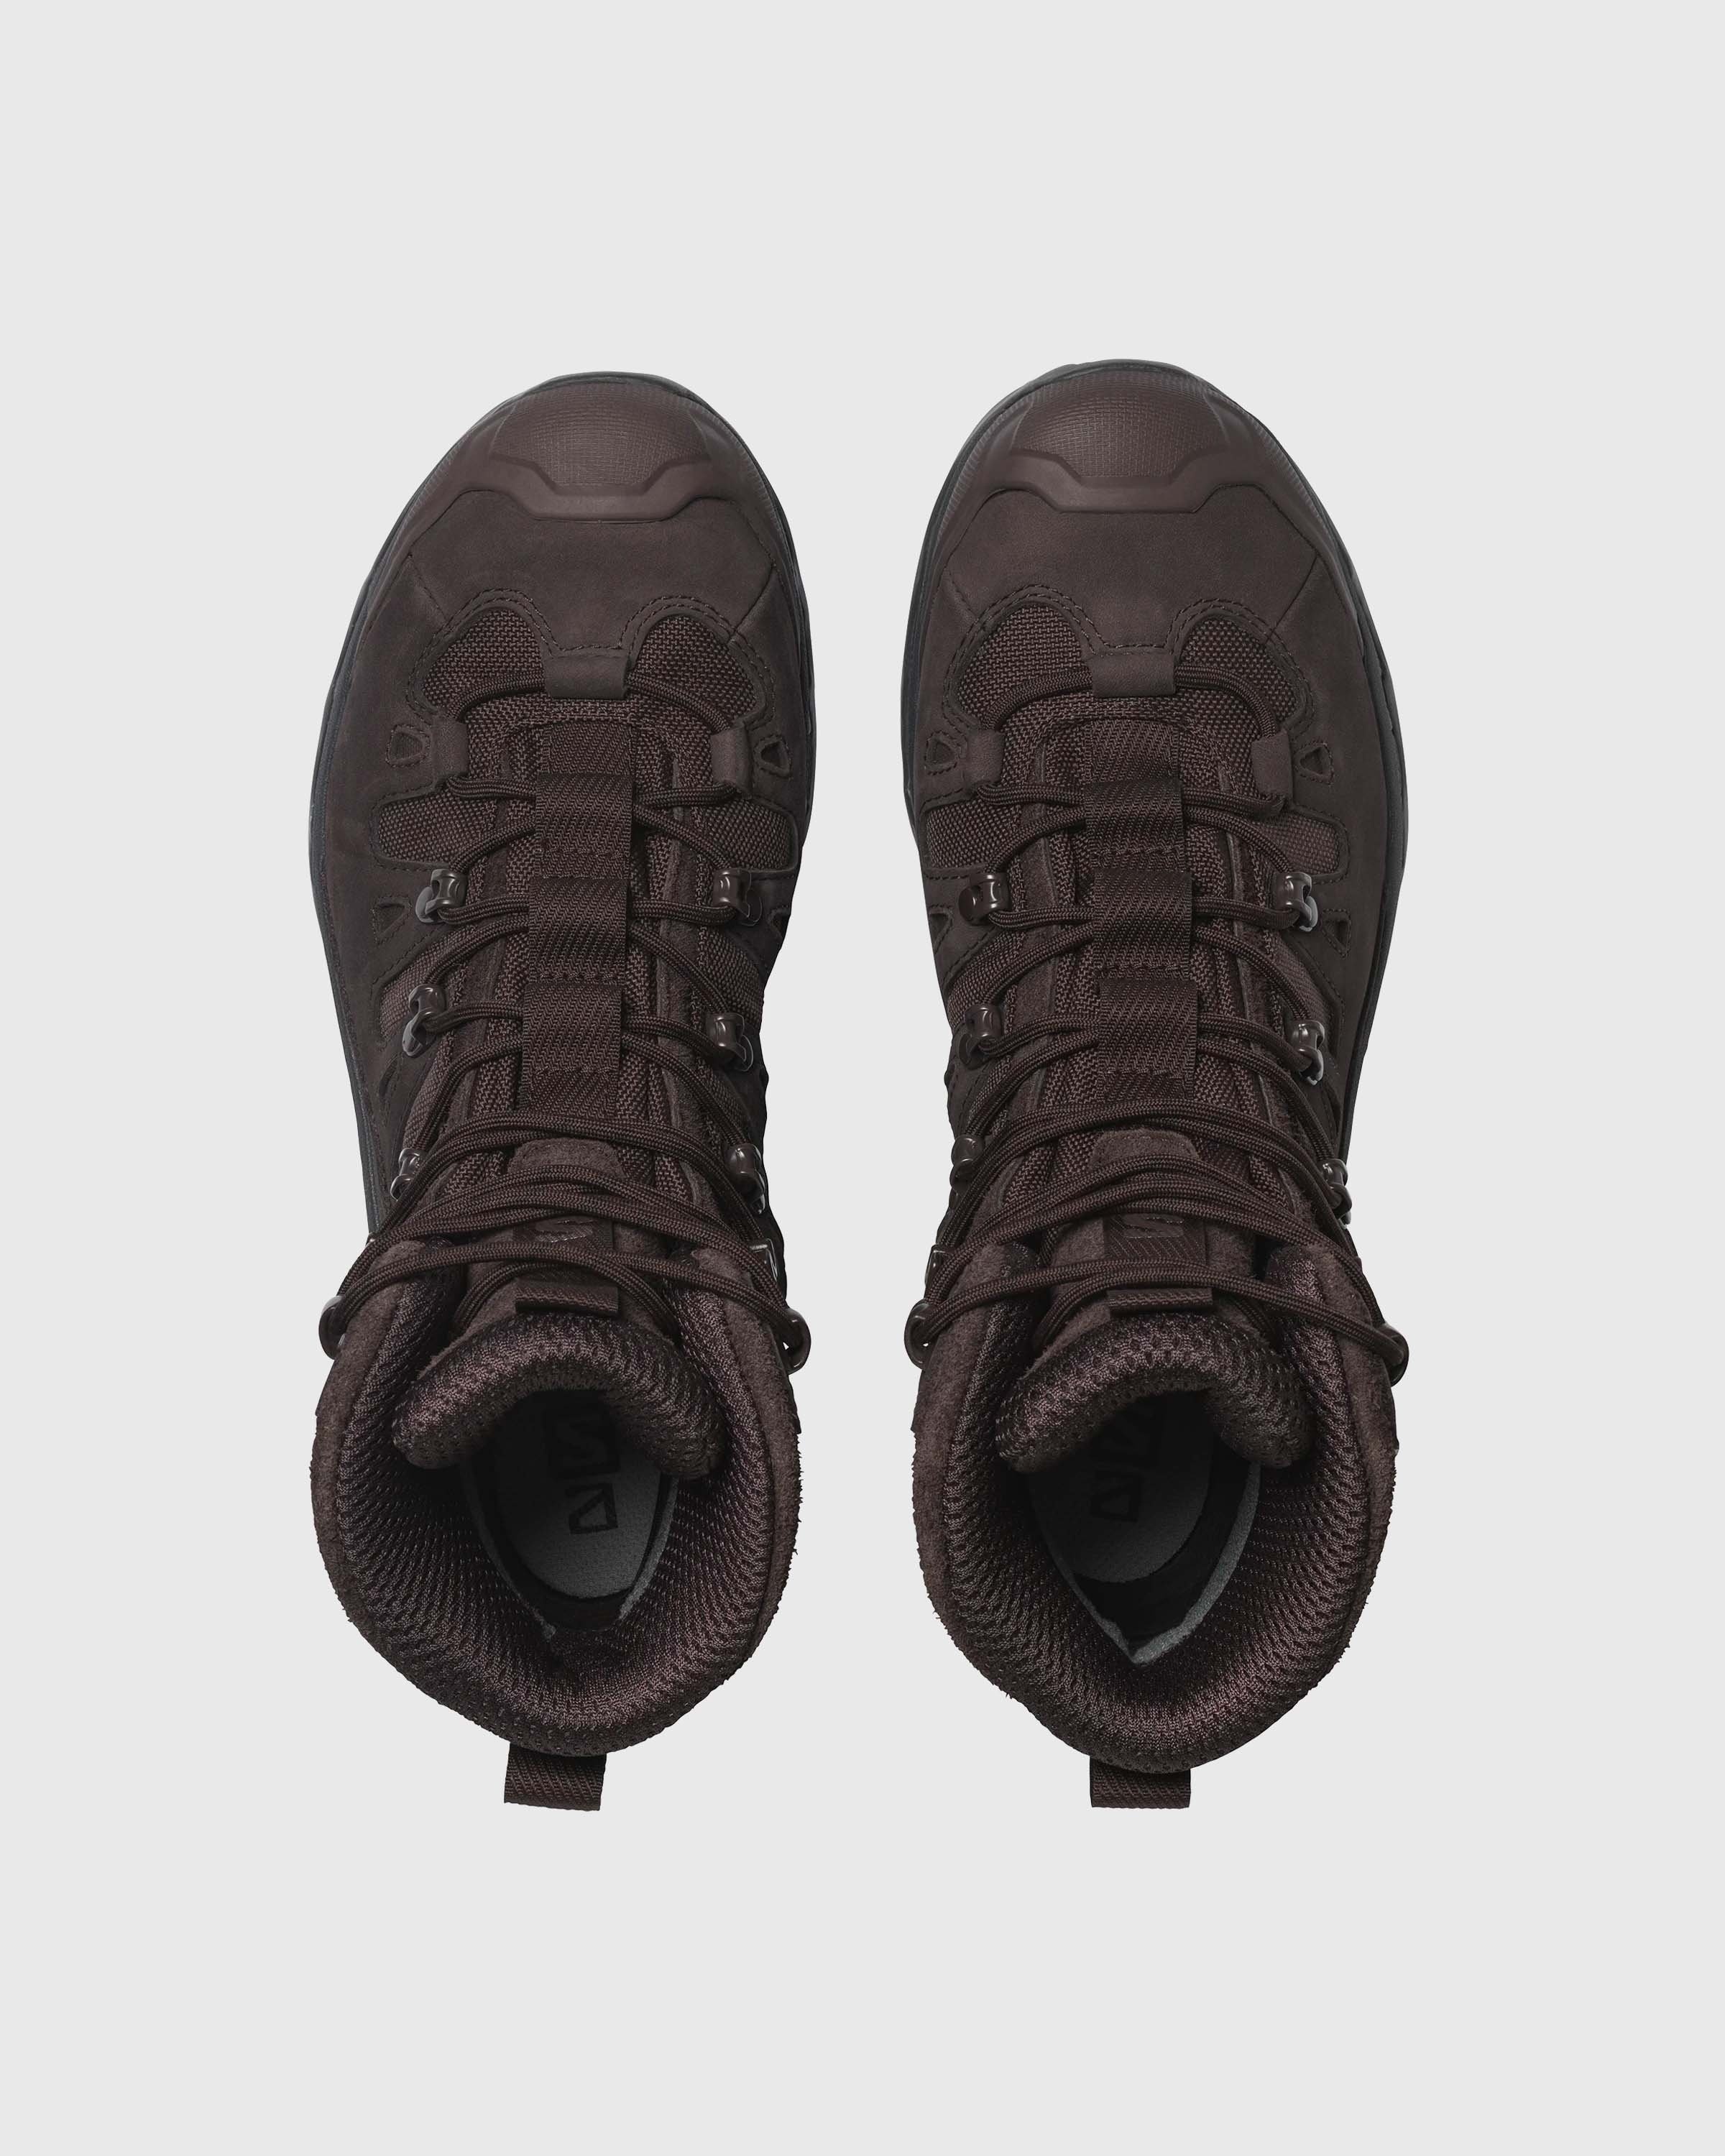 Salomon – Quest 4D GTX Advanced Chocolate Plum - Low Top Sneakers - Brown - Image 4